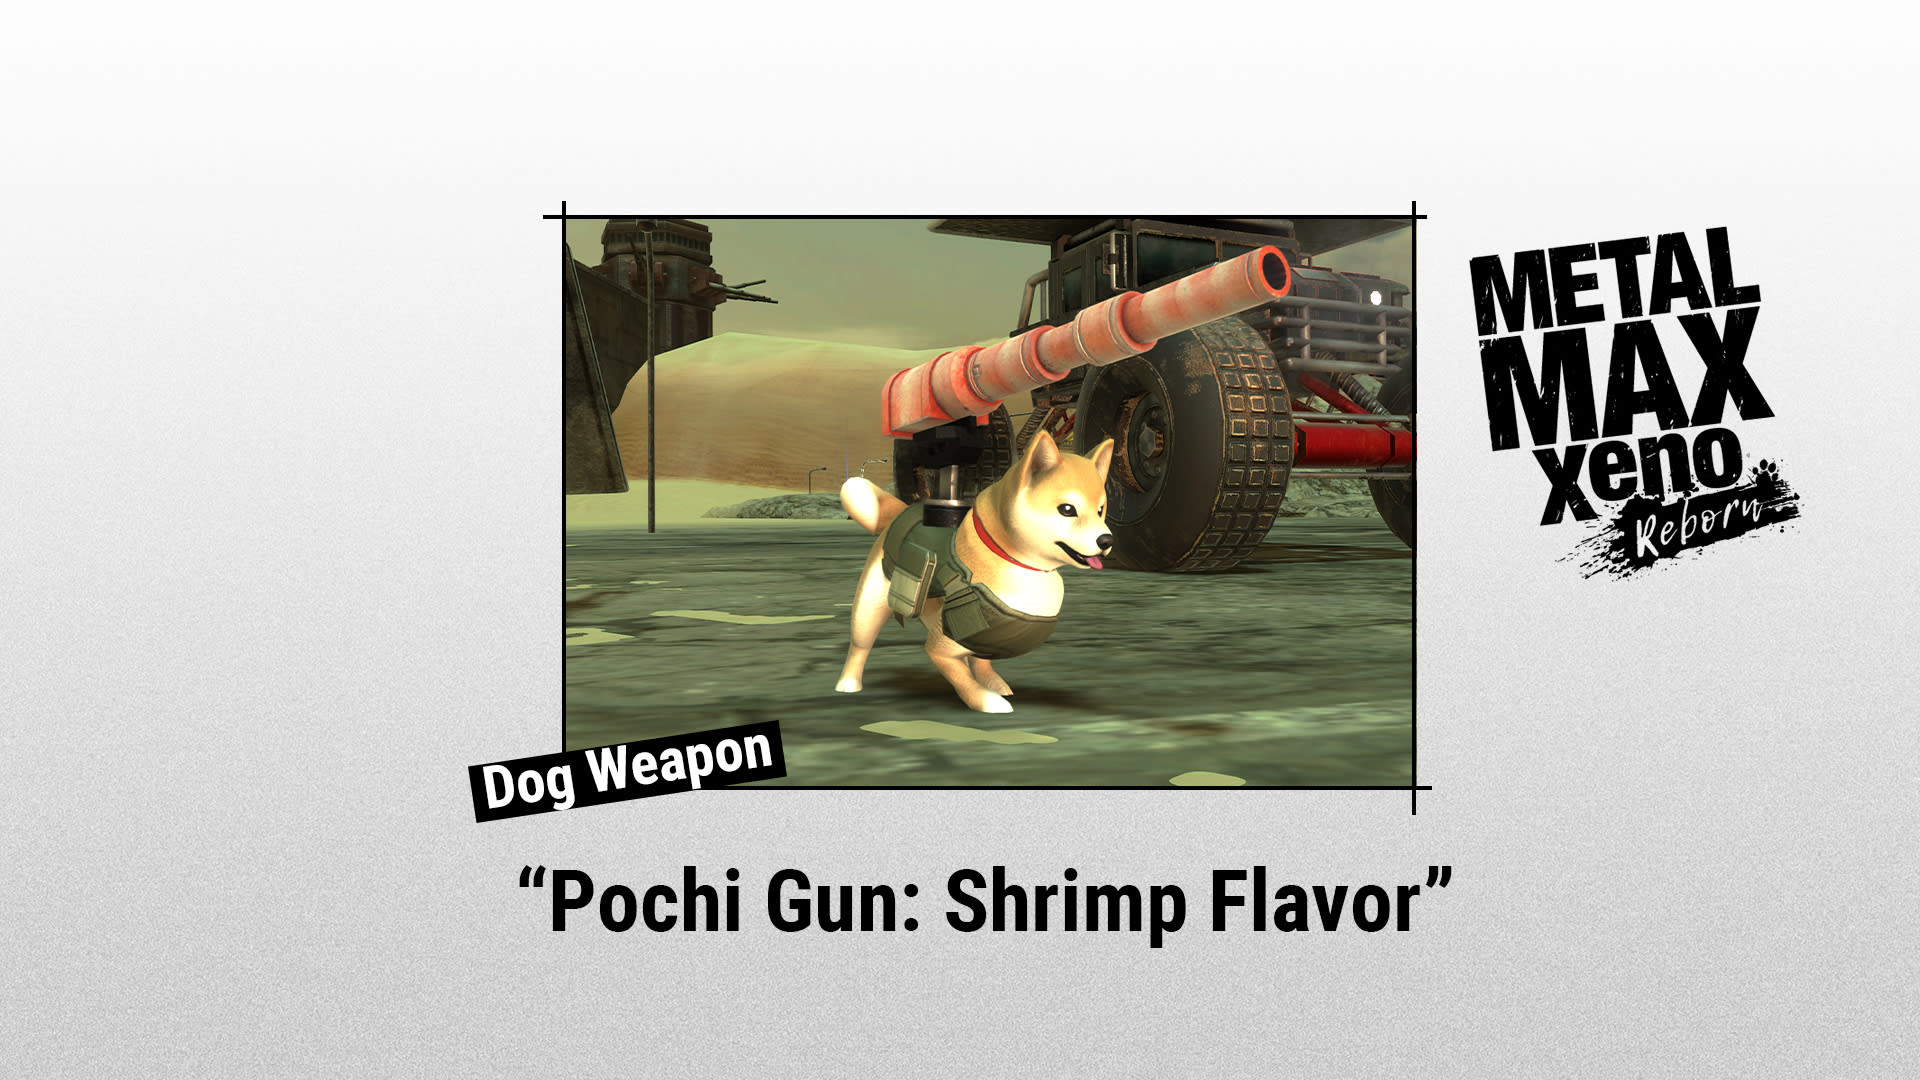 Pochi Gun: Shrimp Flavor